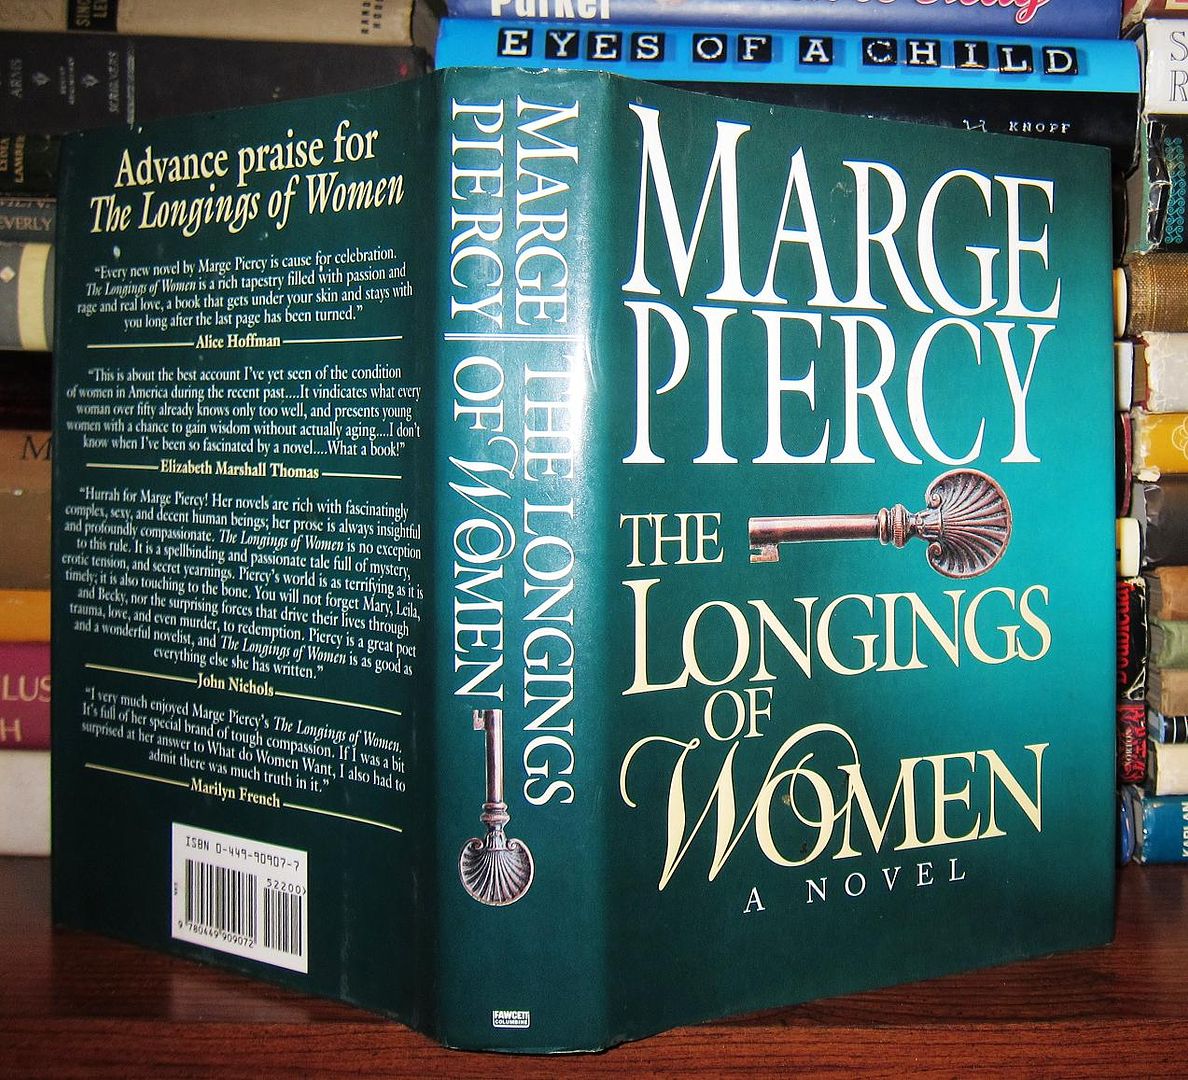 PIERCY, MARGE - The Longings of Women